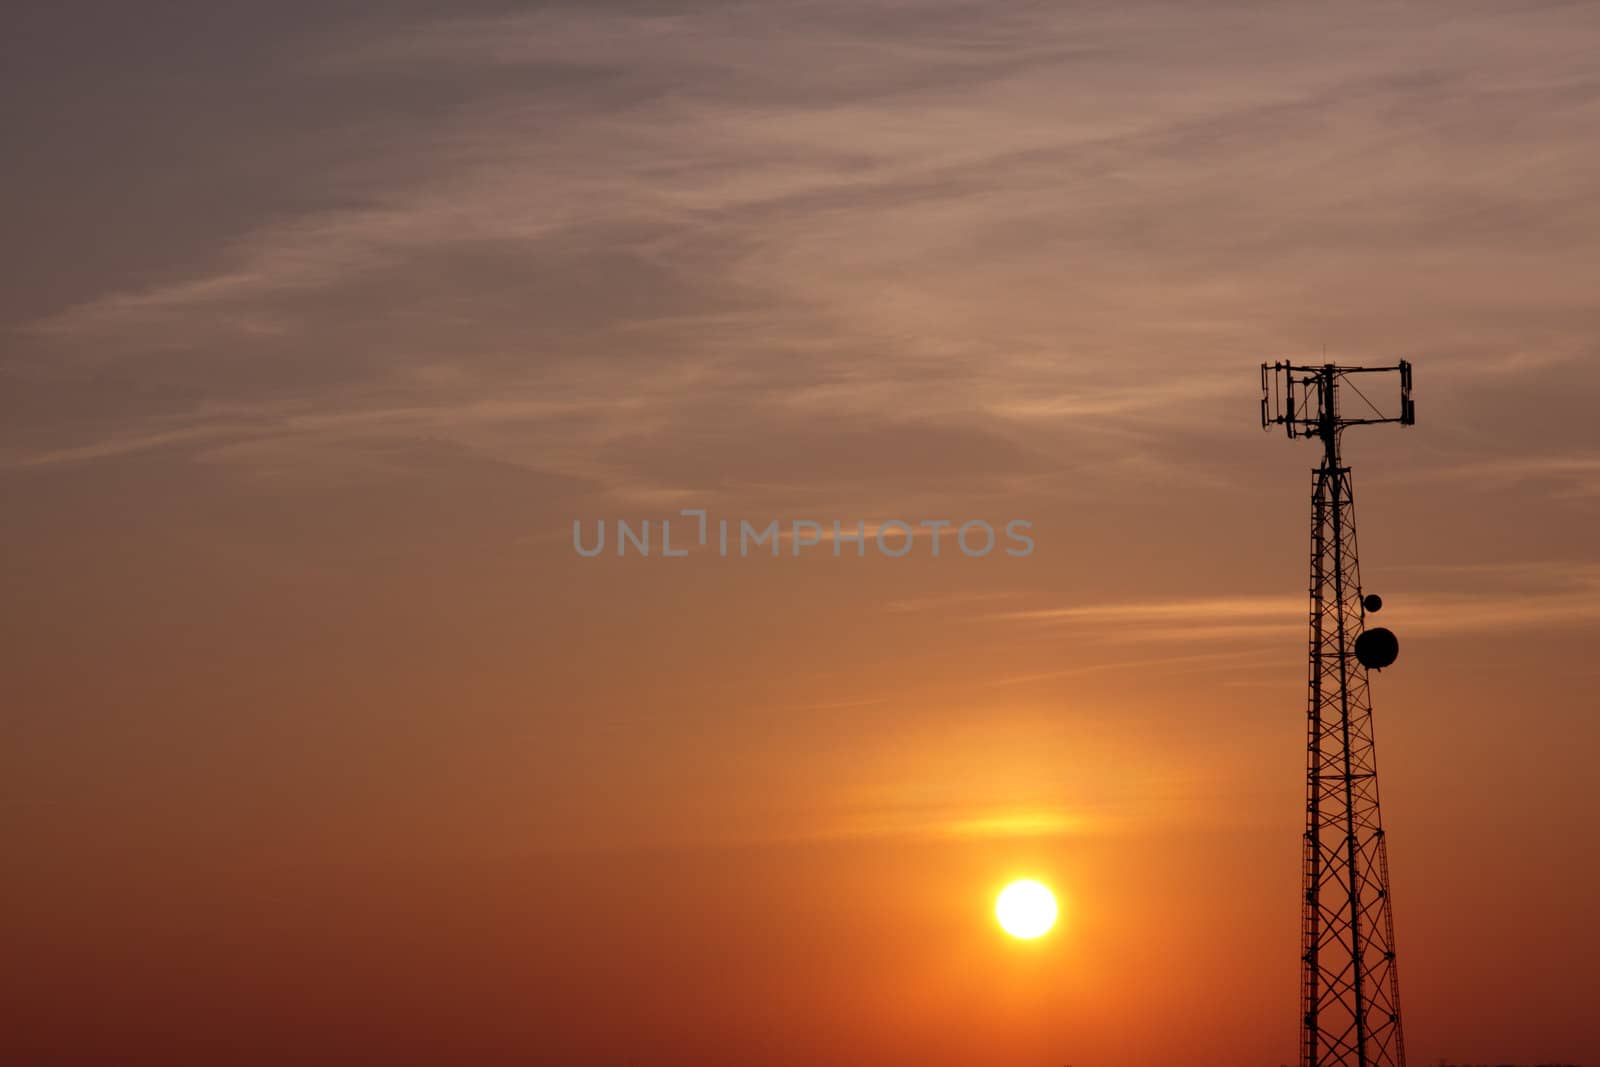 Sunrise Communications by ca2hill